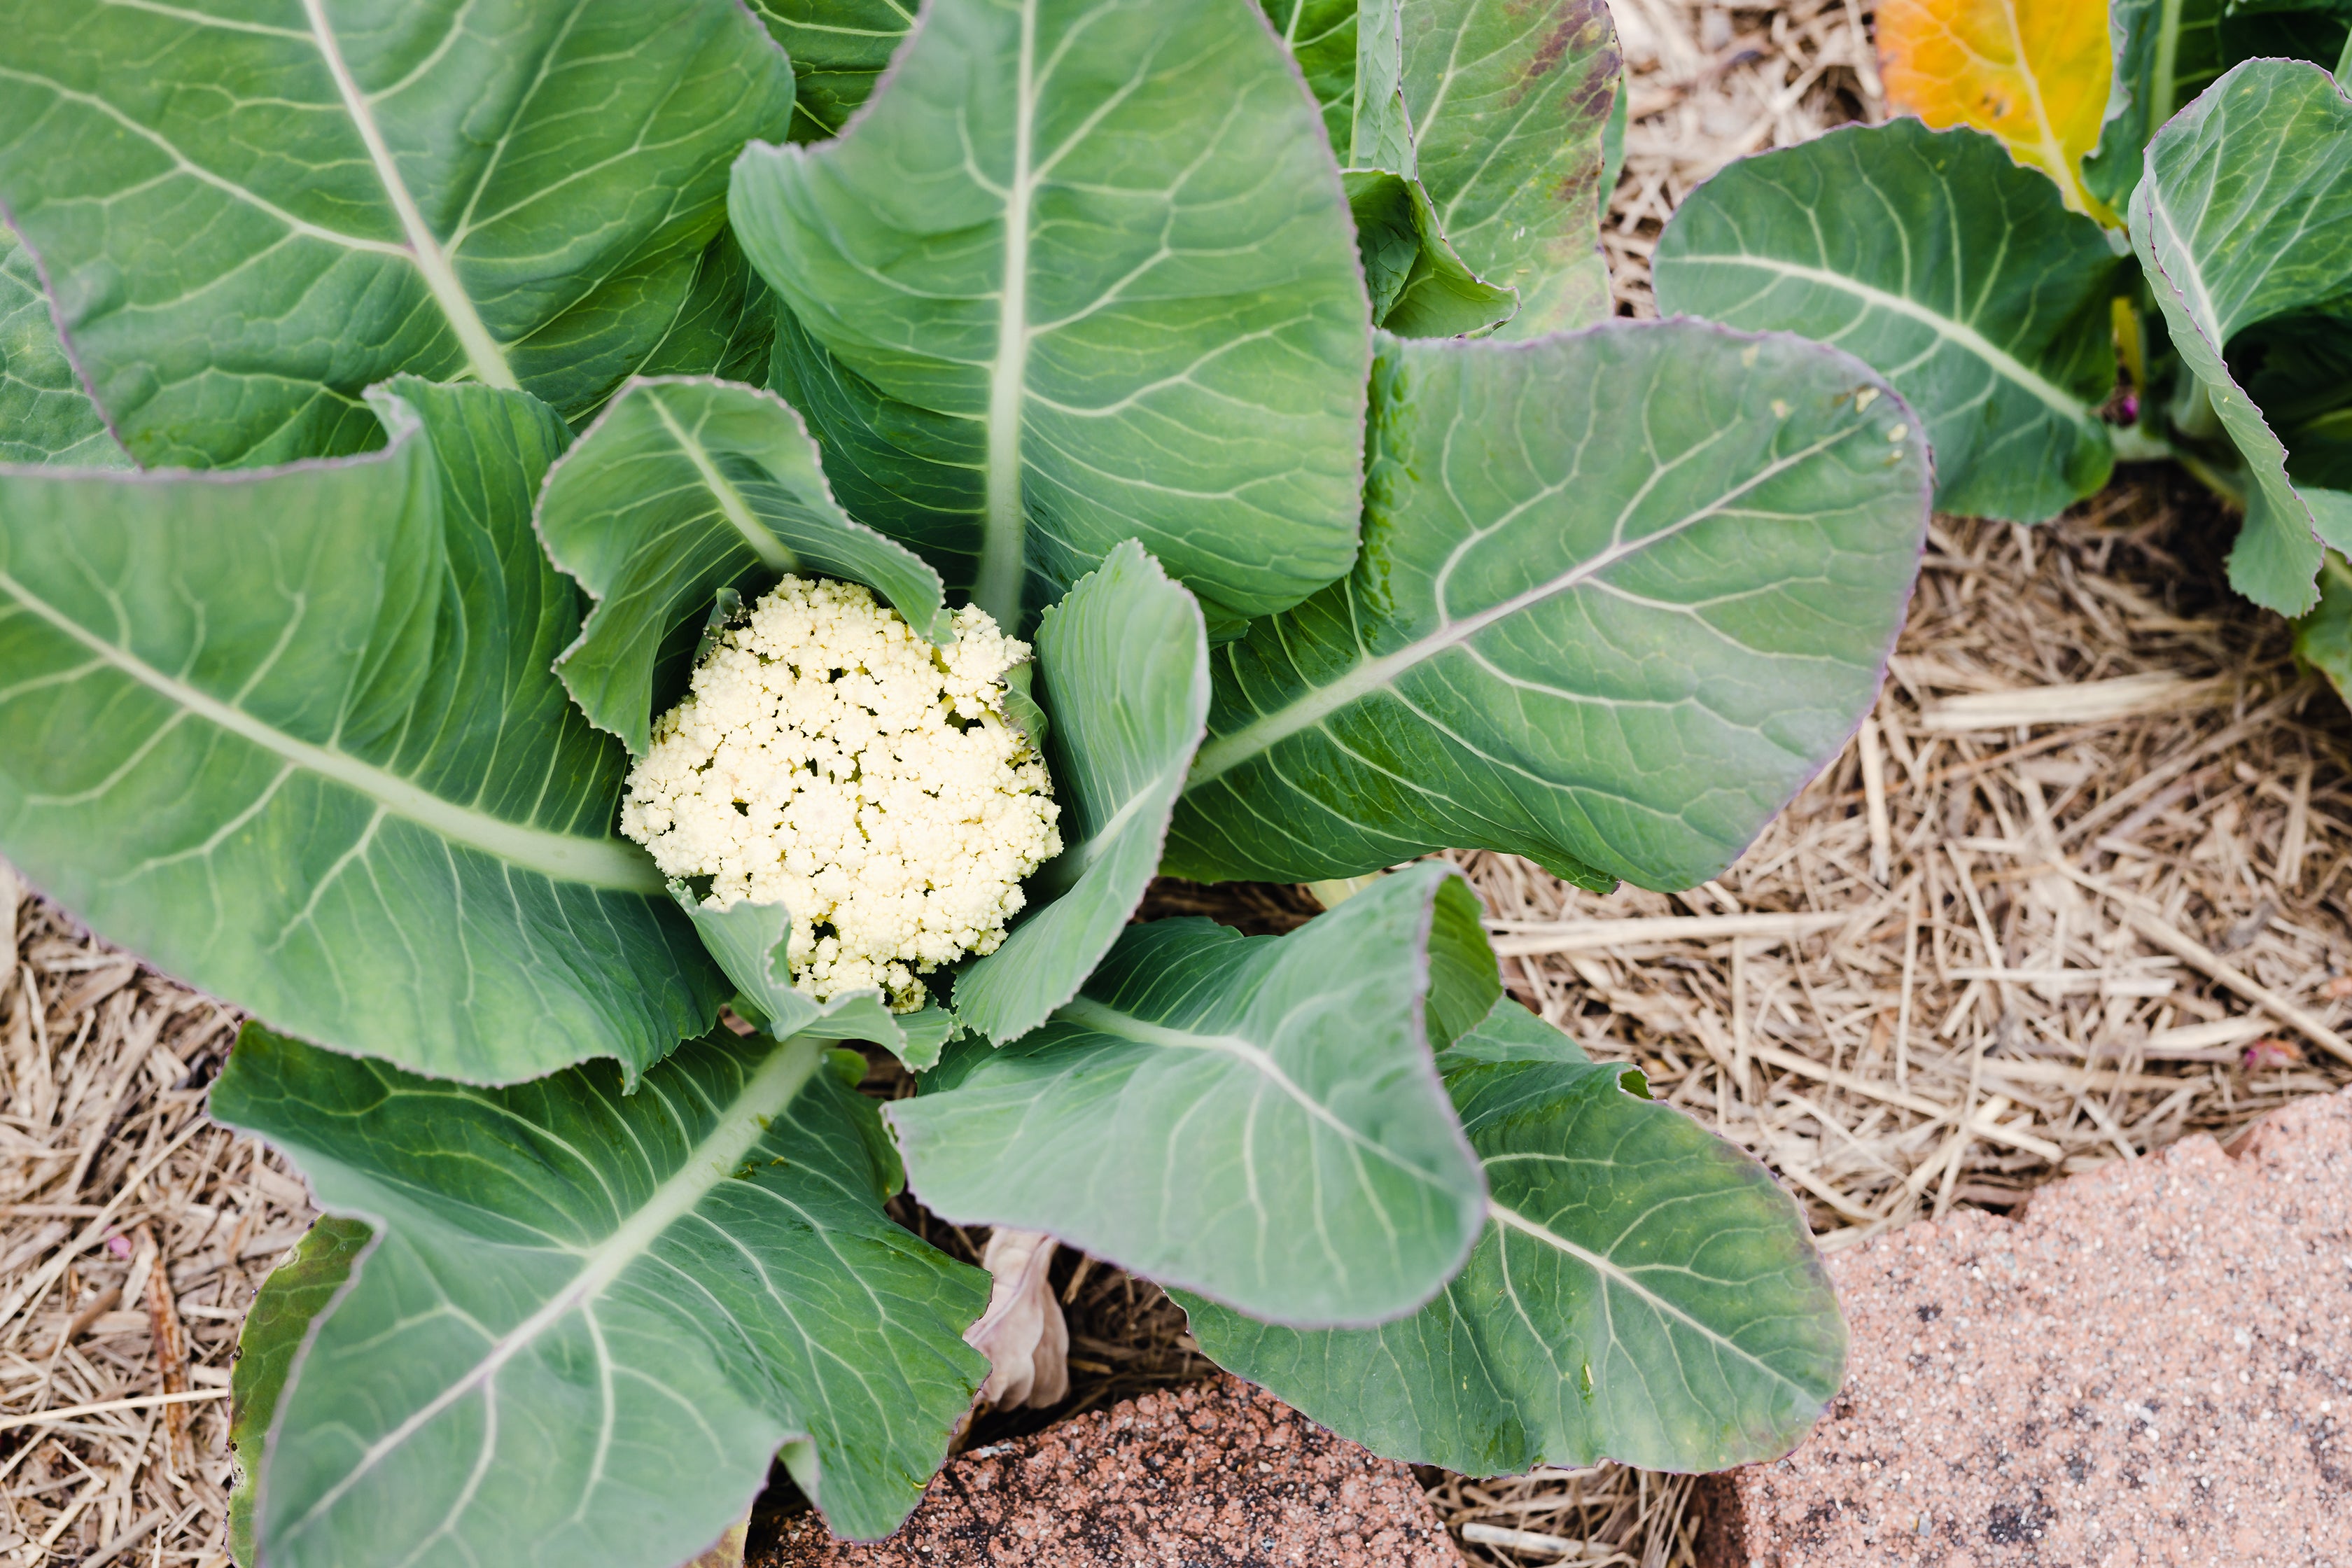 Cauliflower plant used in Kekoa Foods organic baby foods.